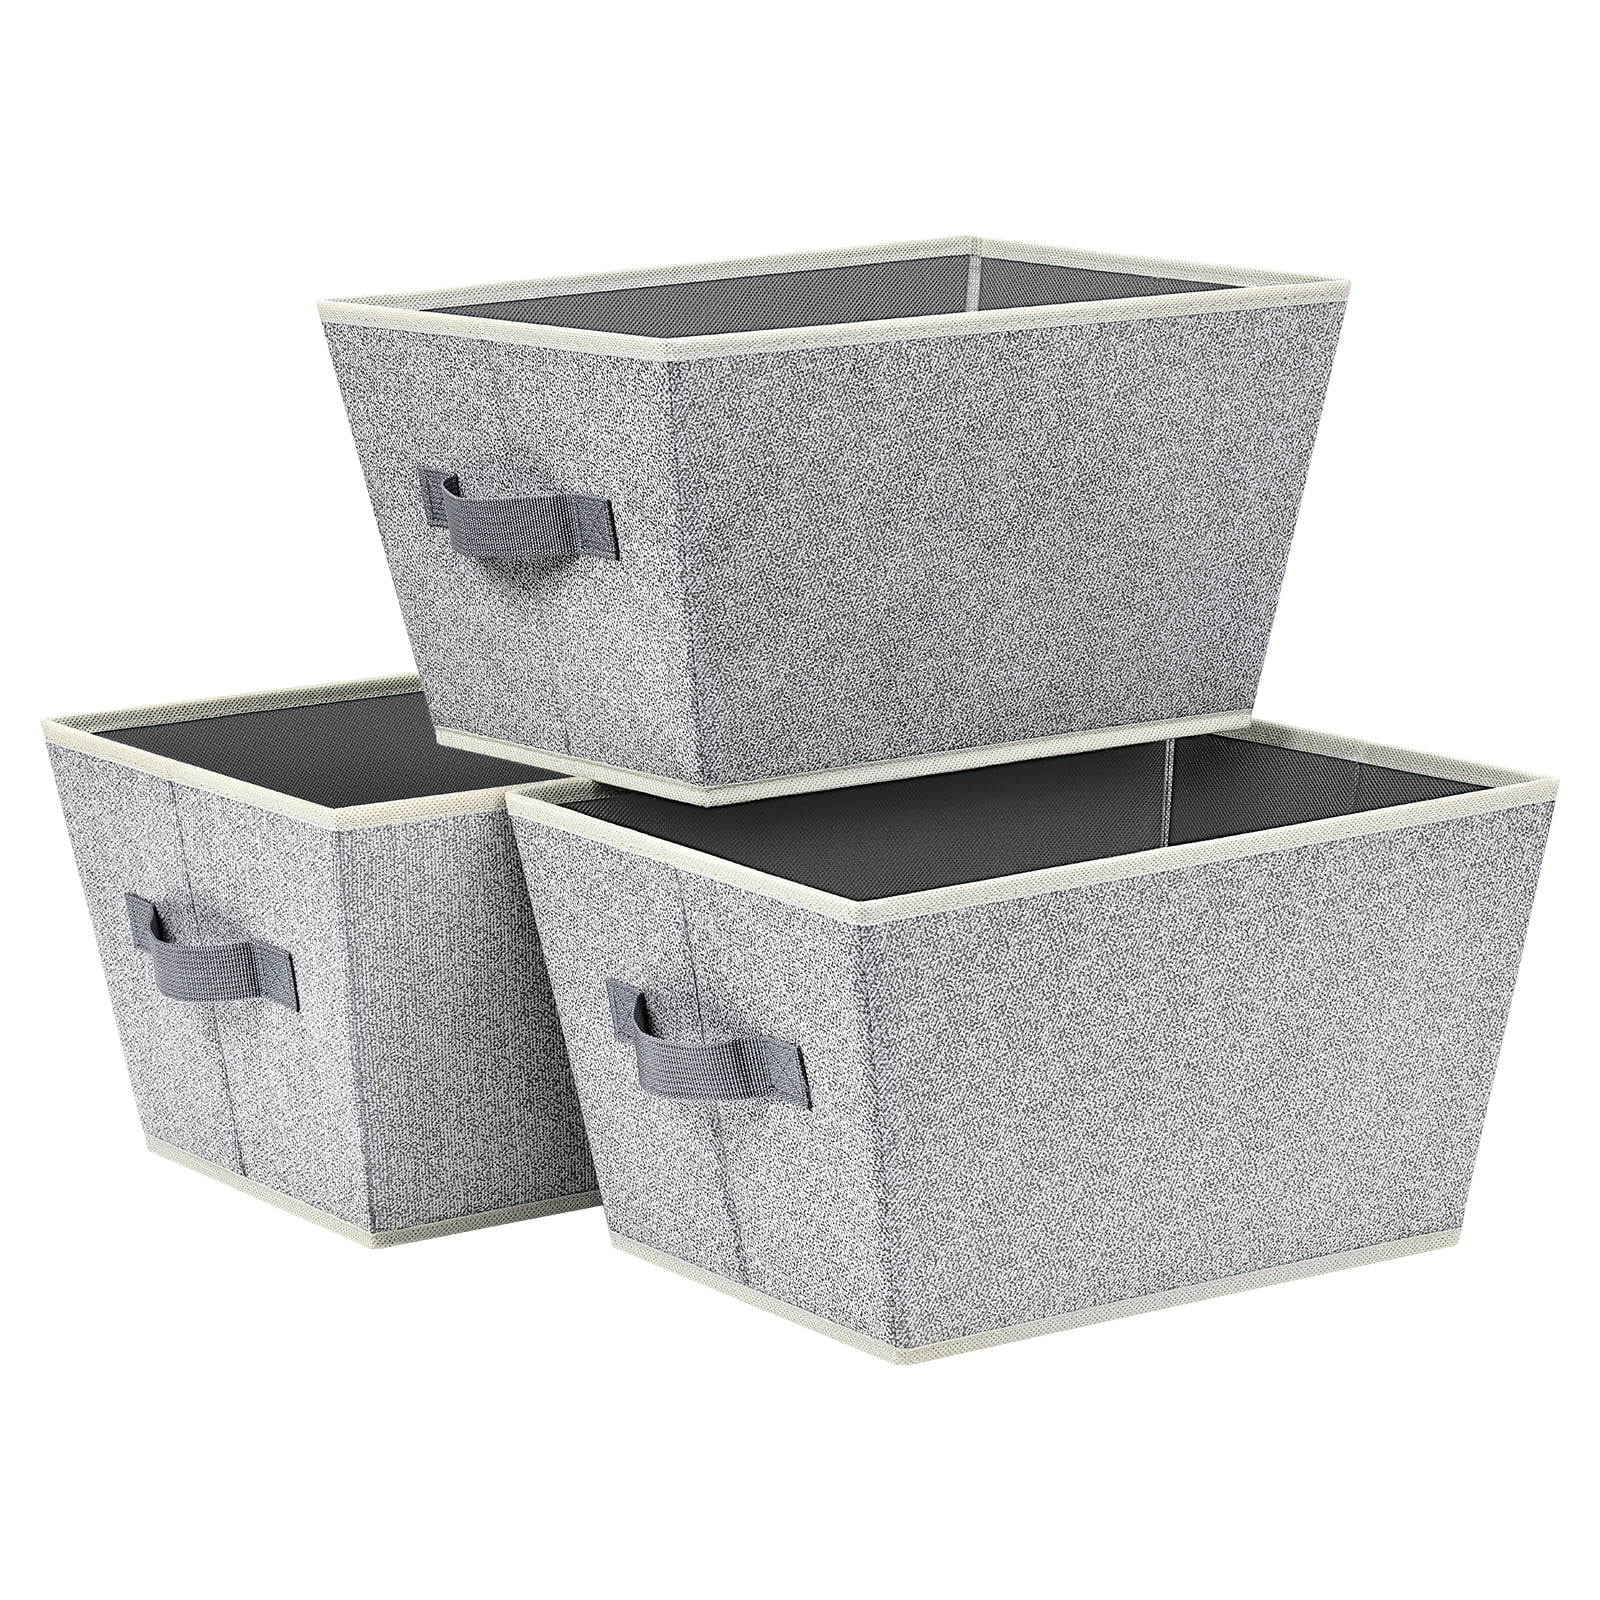 KEEGH Closet Baskets and Storage Bins for Shelves Linen Closet Shelf  Organizers and Storage Box Trapezoid Storage Bins Shelf Baskets with  Handles for